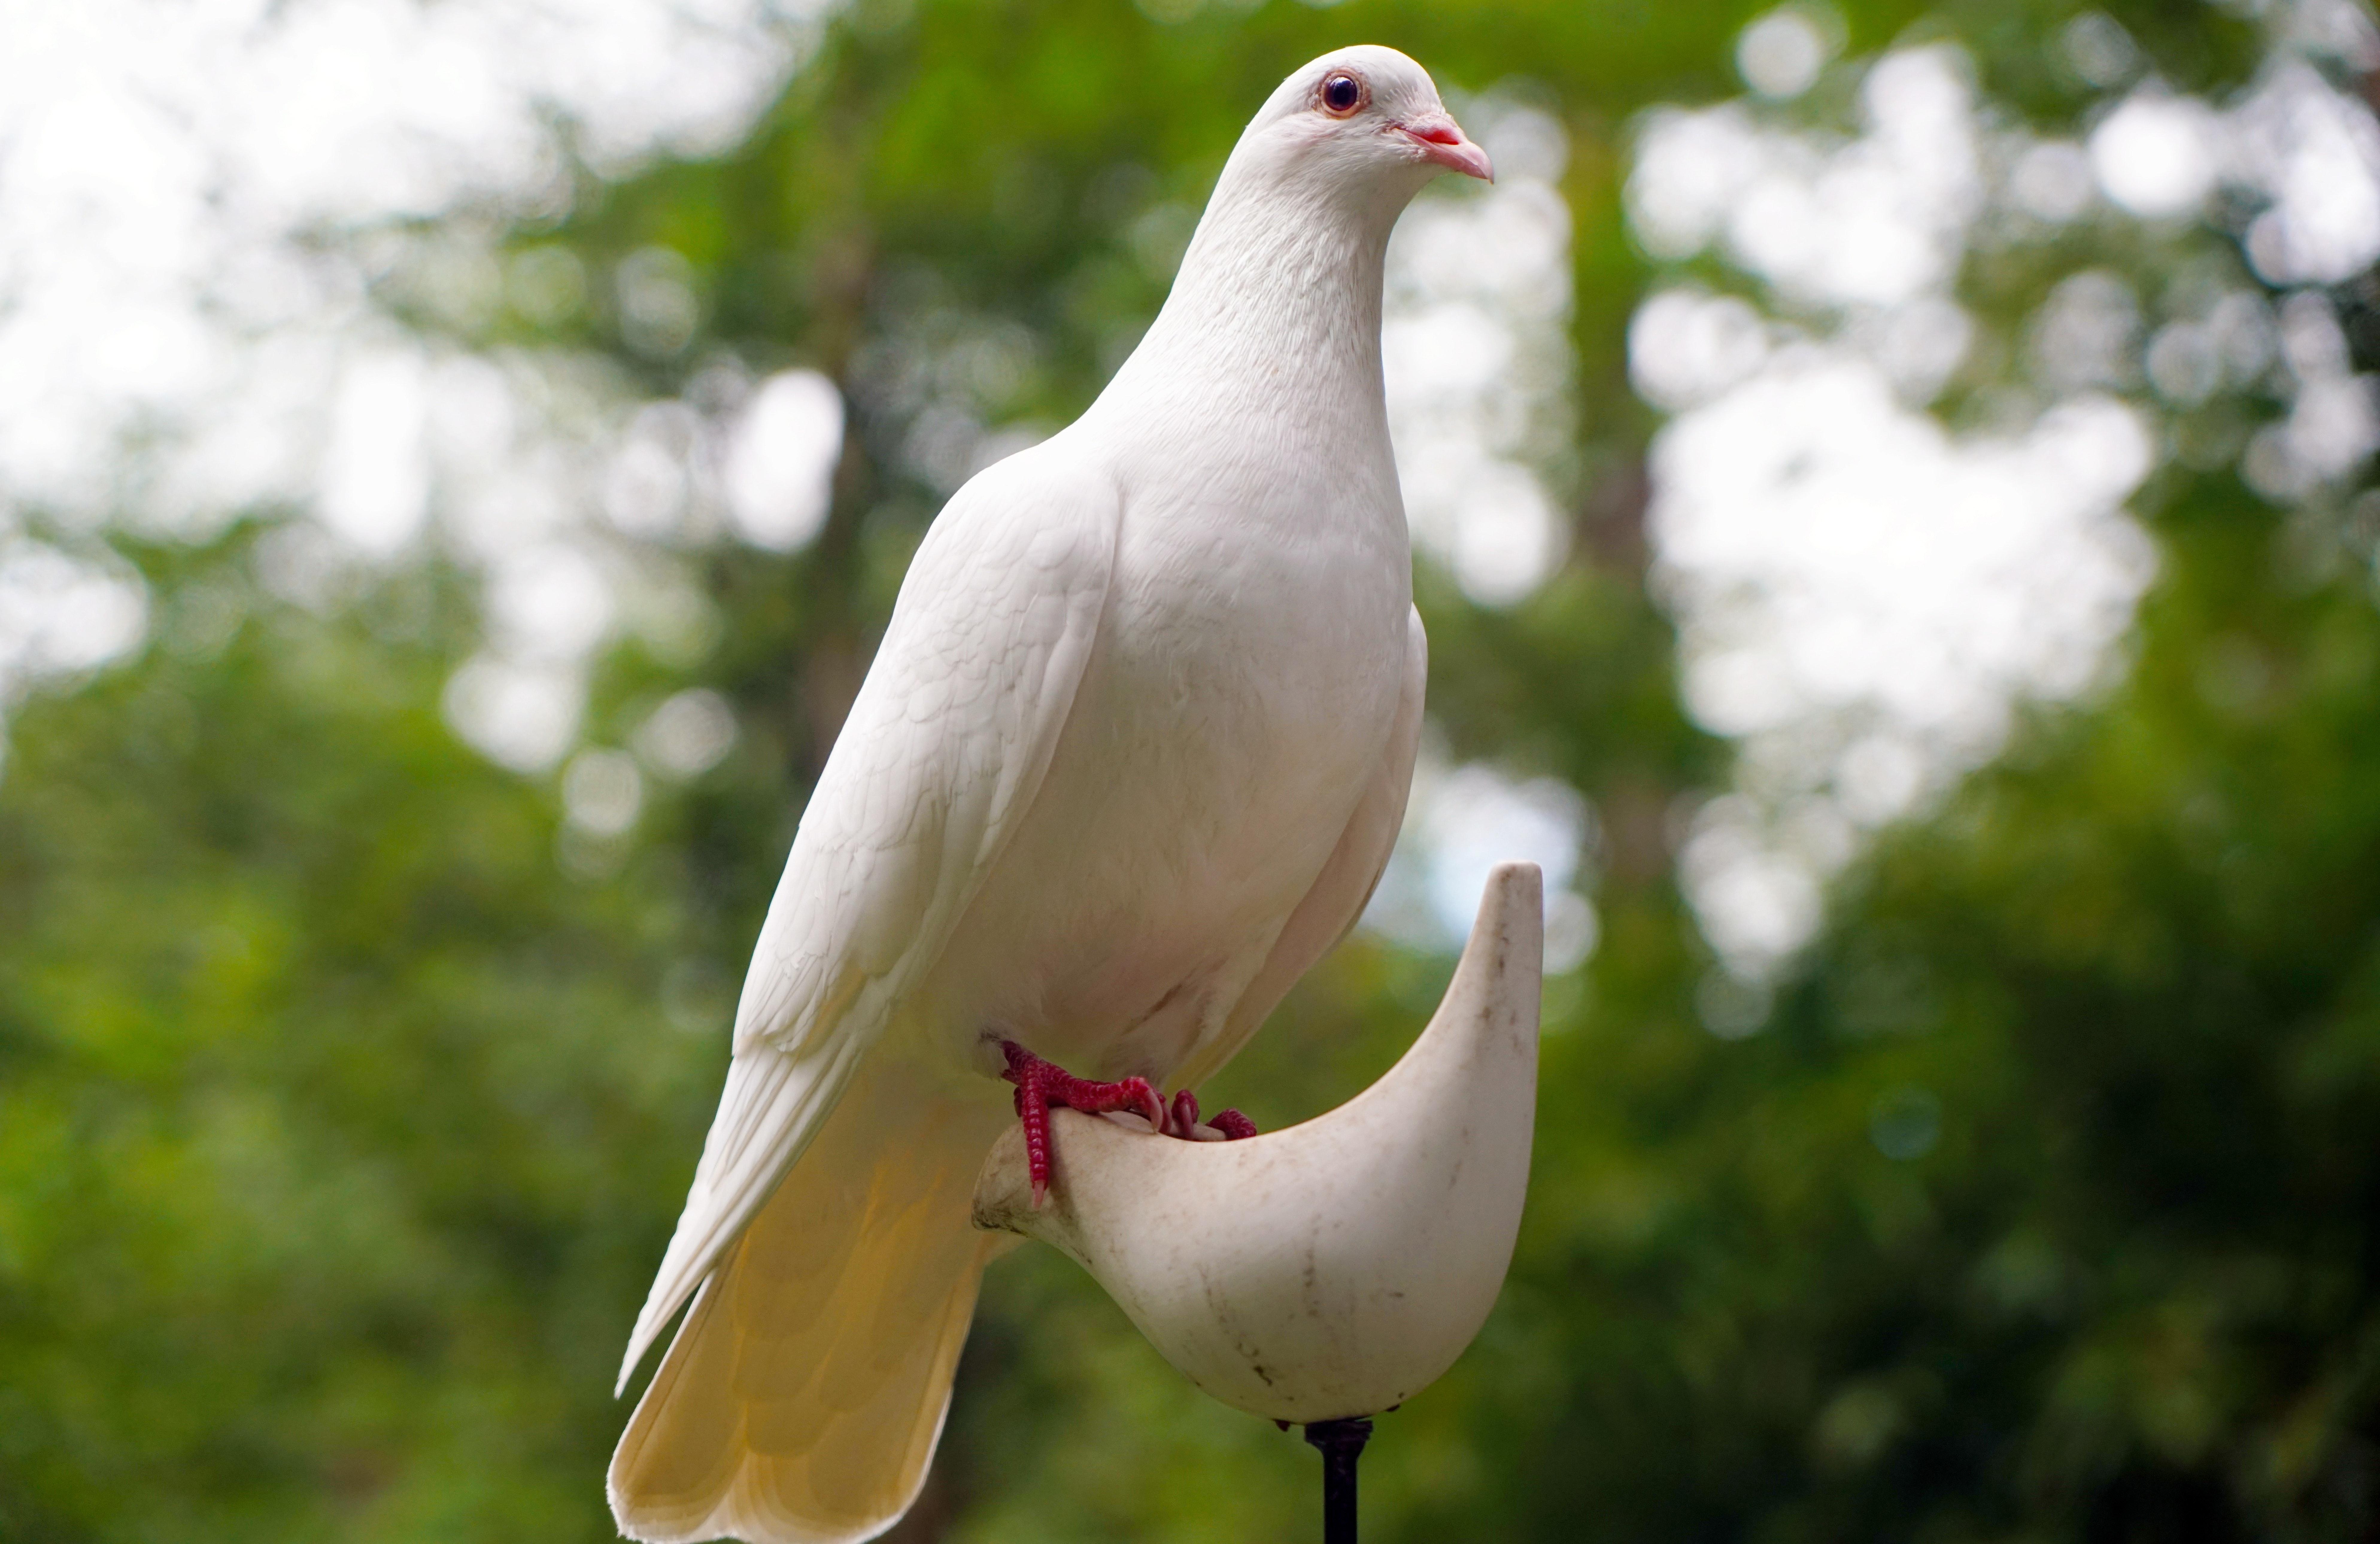 White Dove on White Bird Figure Stand · Free